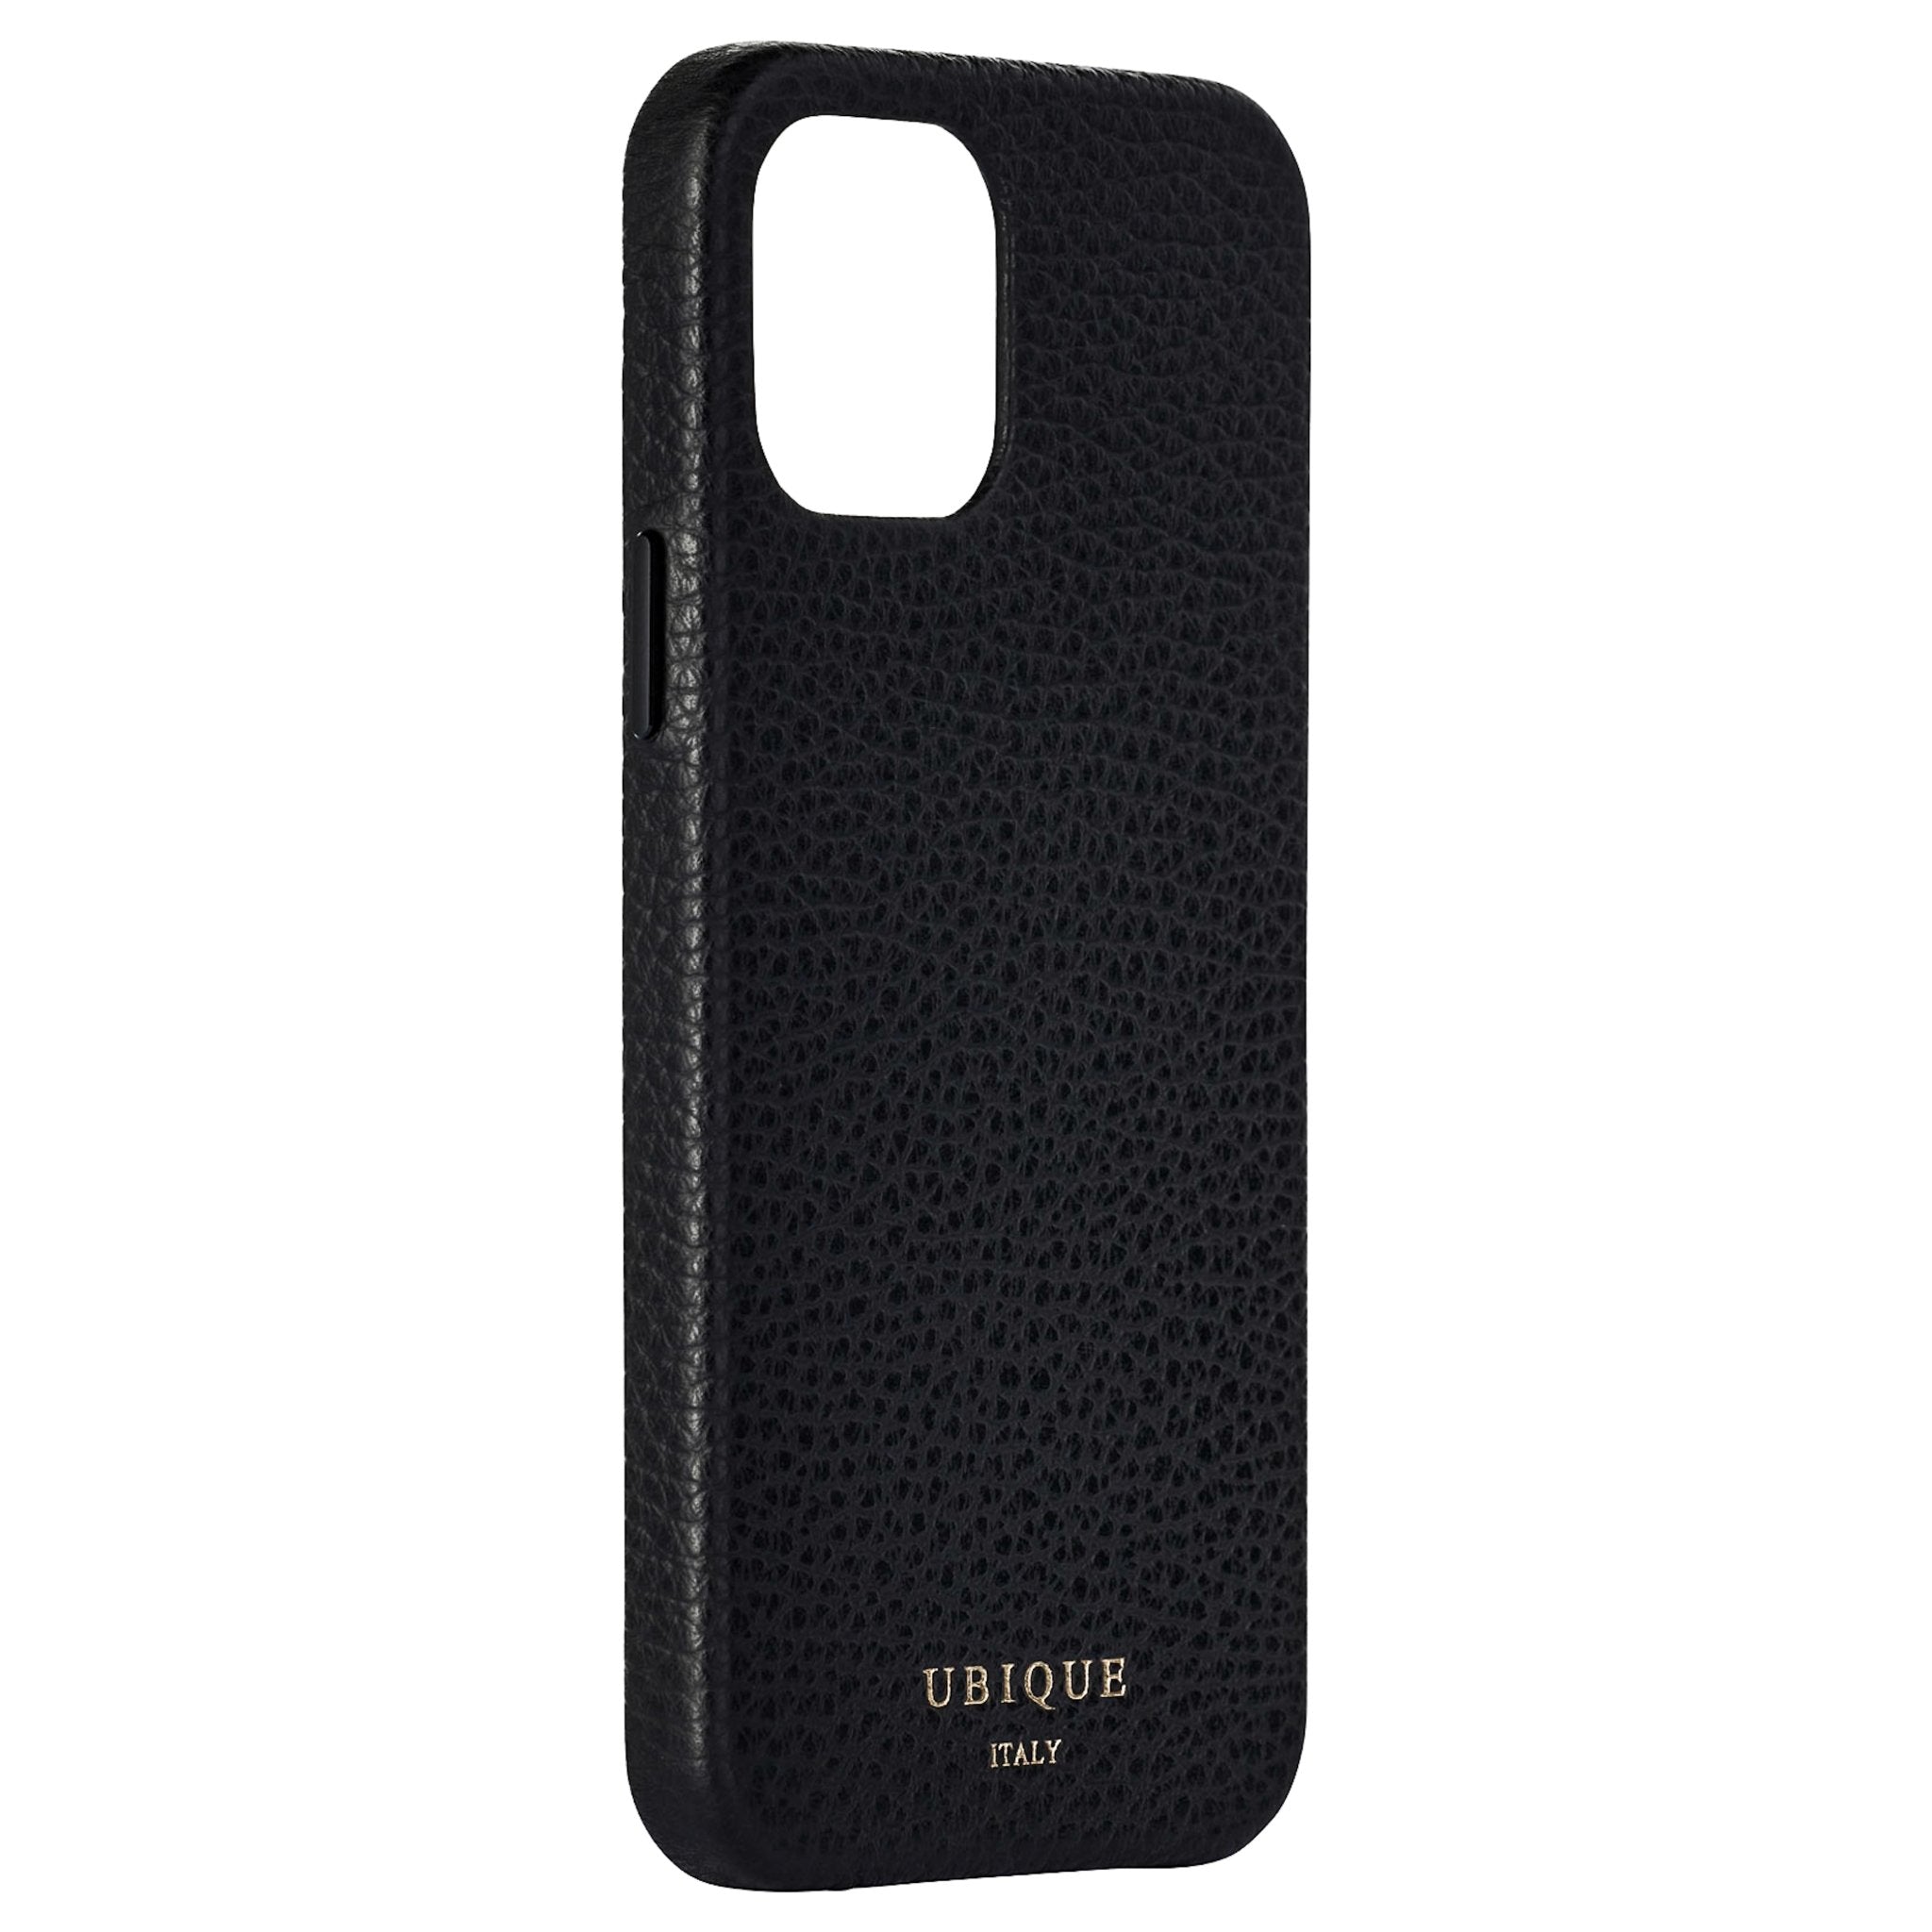 Ubique Italy Luxury iPhone Case 12 Pro Pebble Grain Leather Black Angled